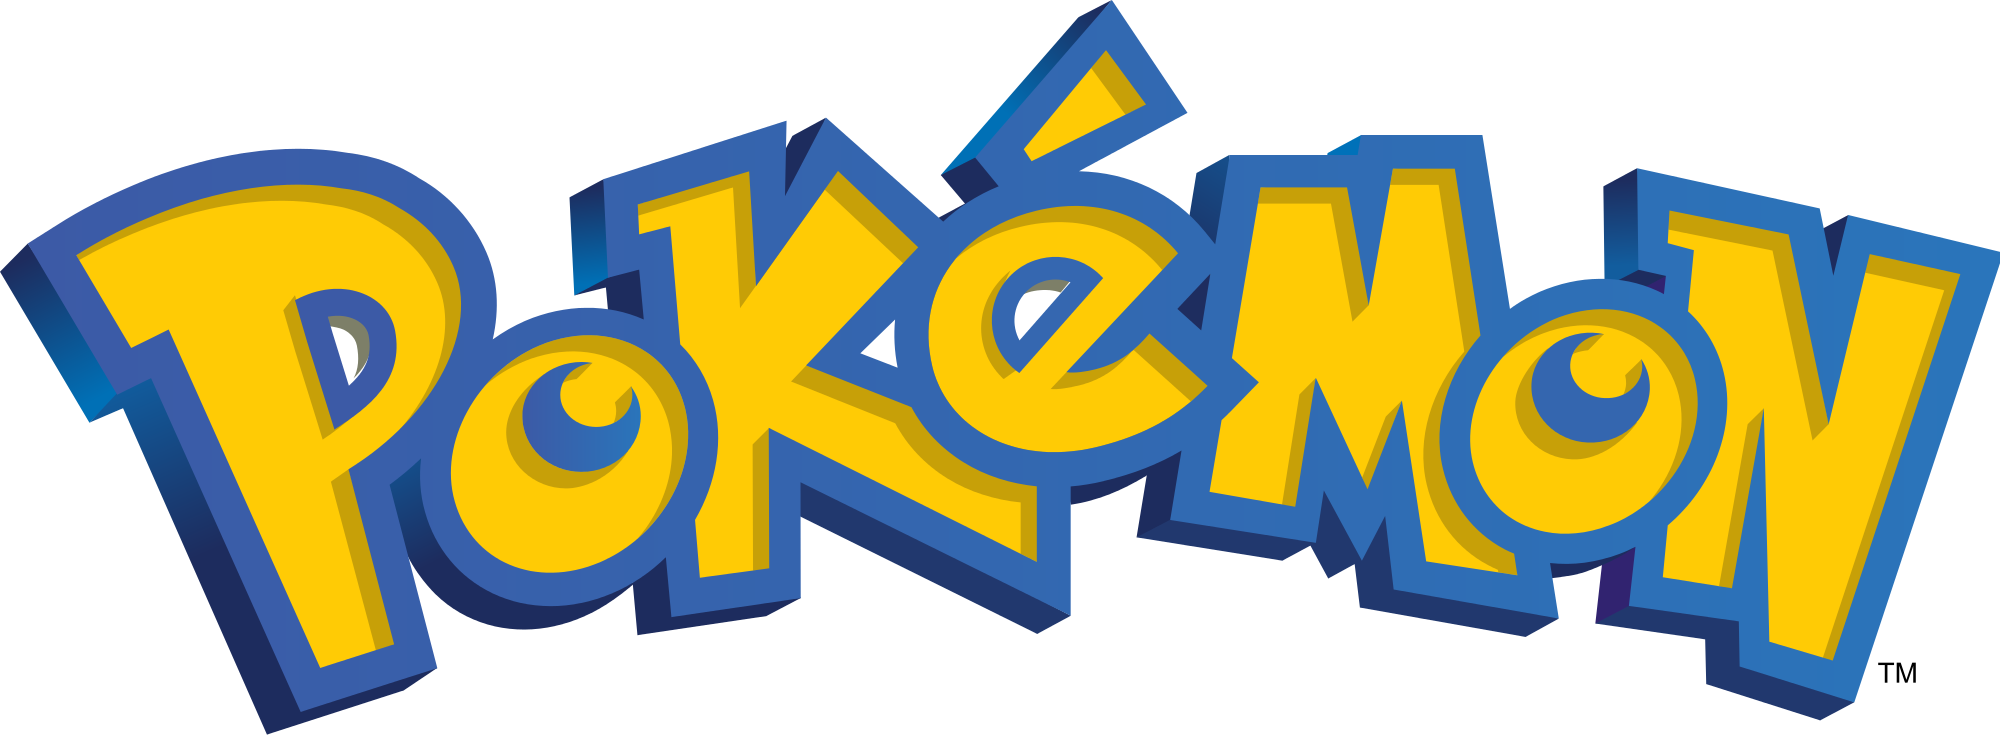 English_Pokémon_logo.svg.png